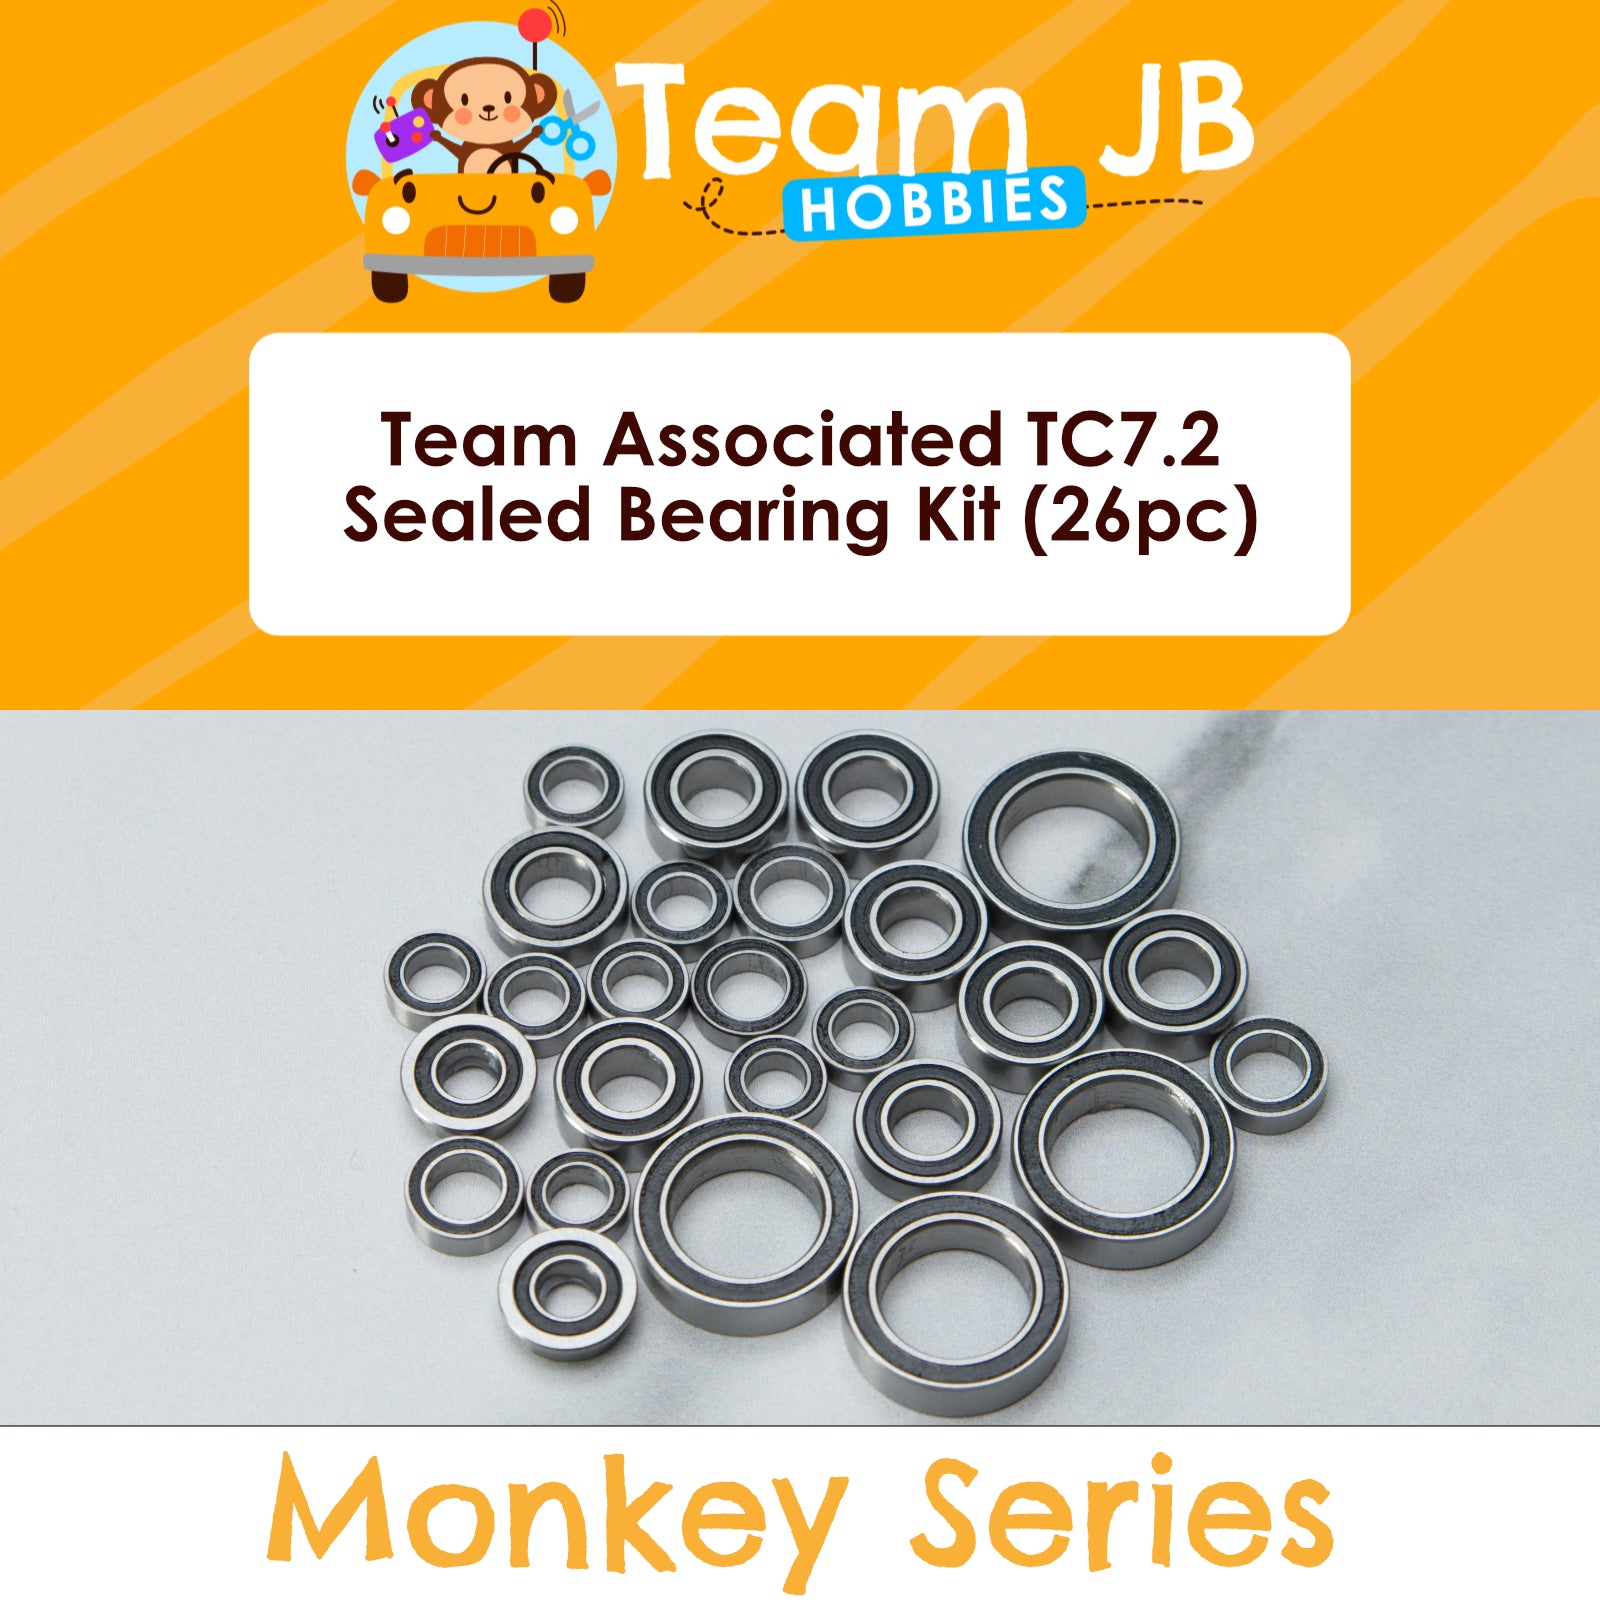 Team Associated TC7.2 - Sealed Bearing Kit